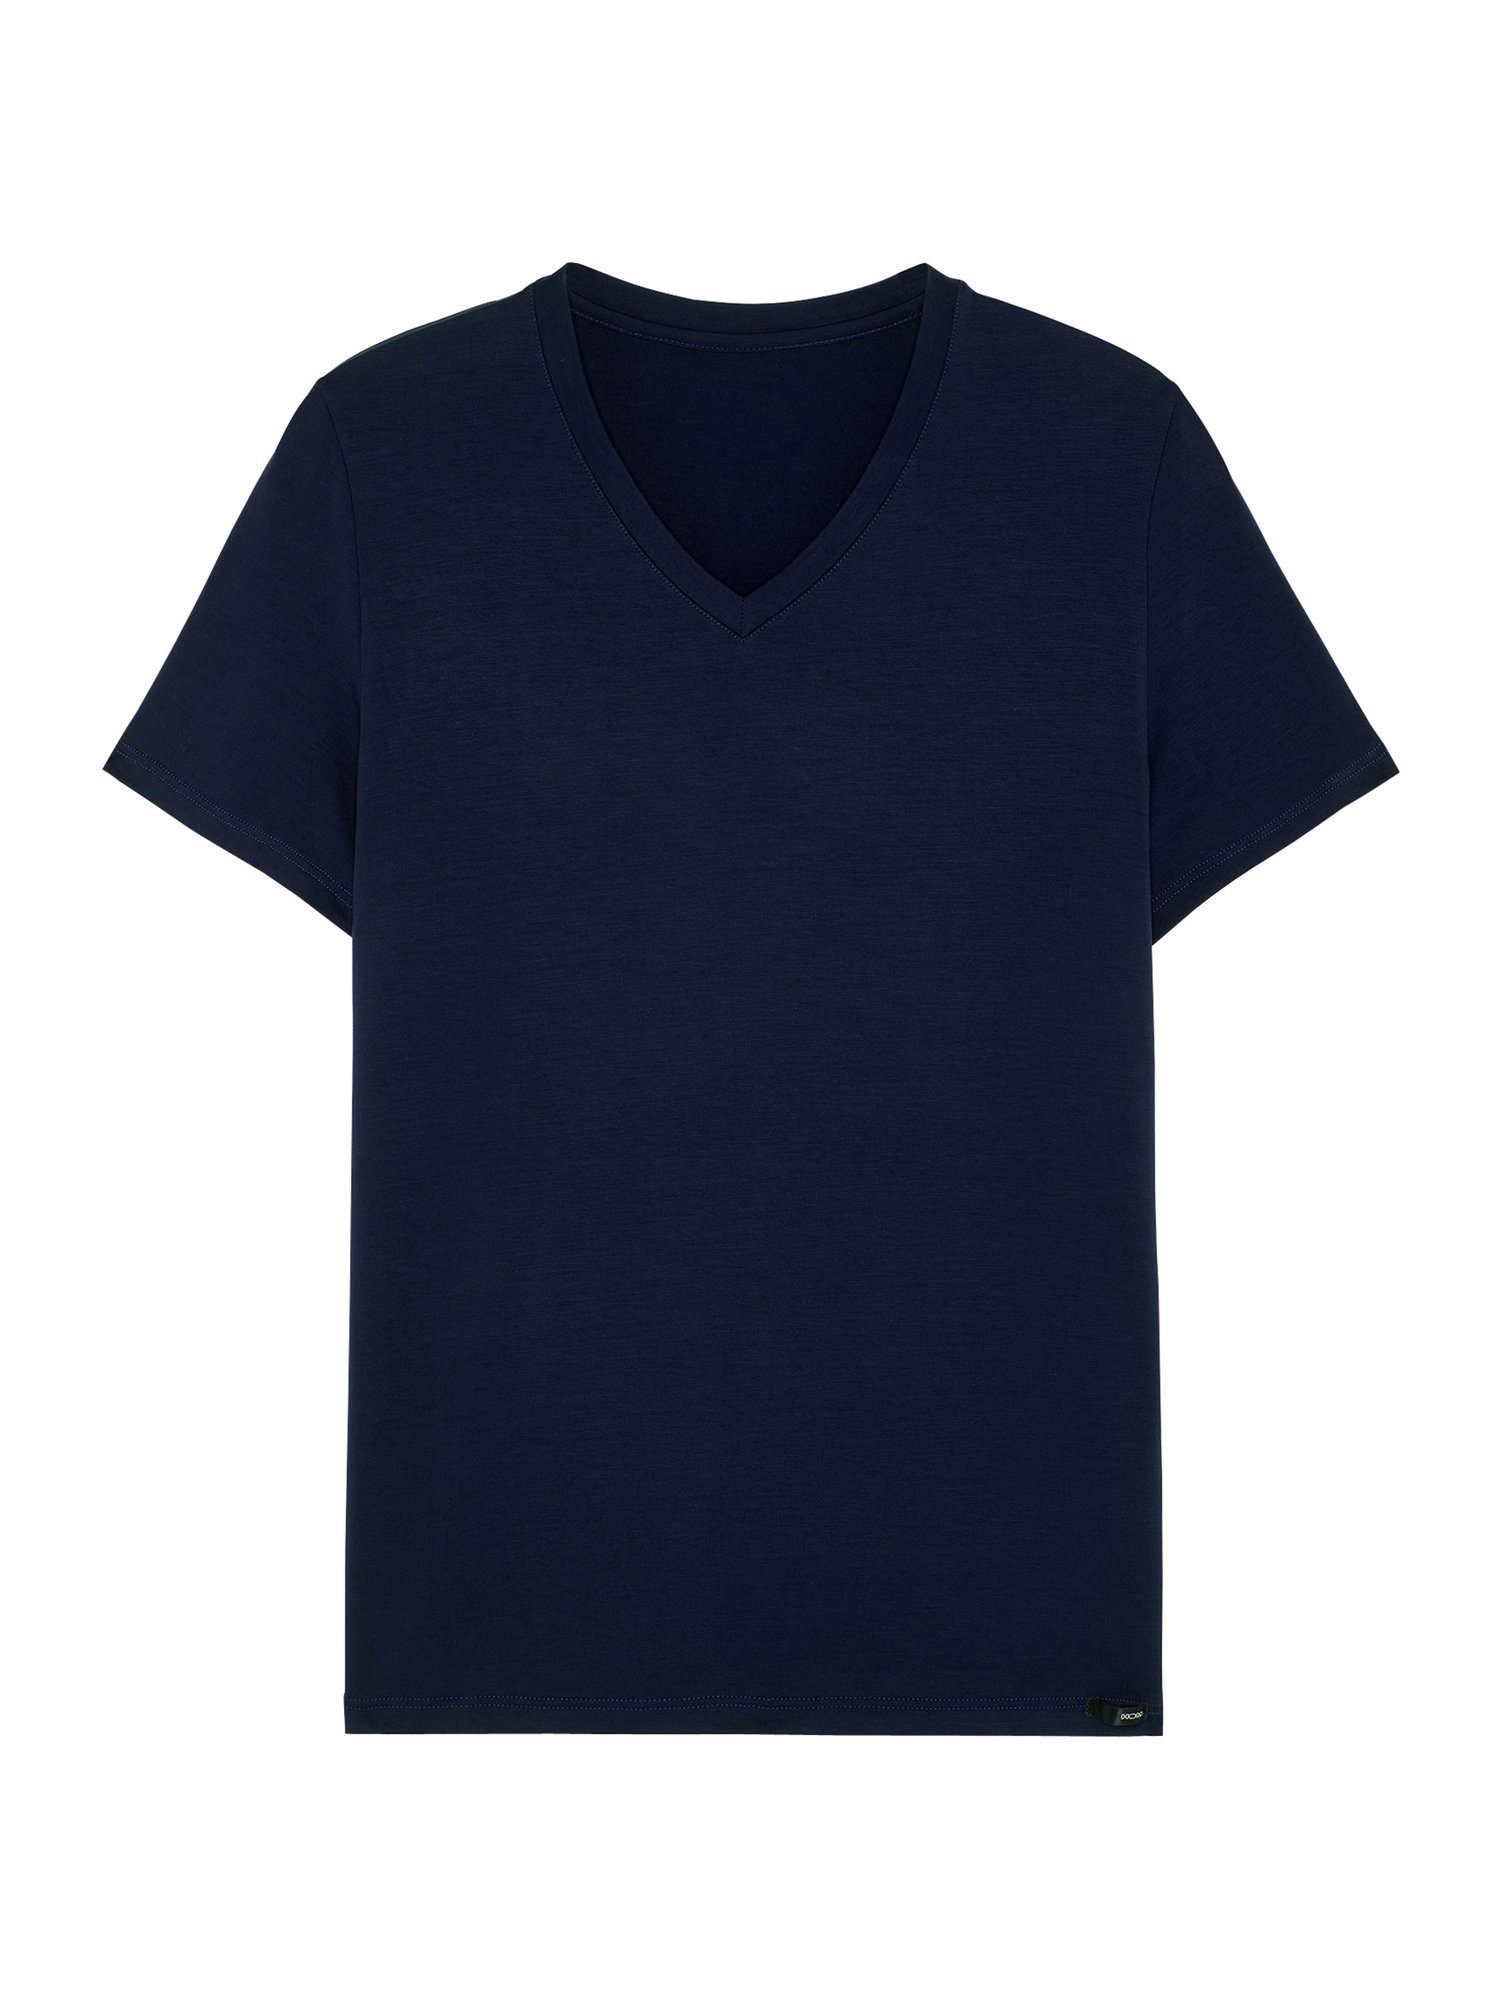 Hom V-Shirt Tencel Soft navy